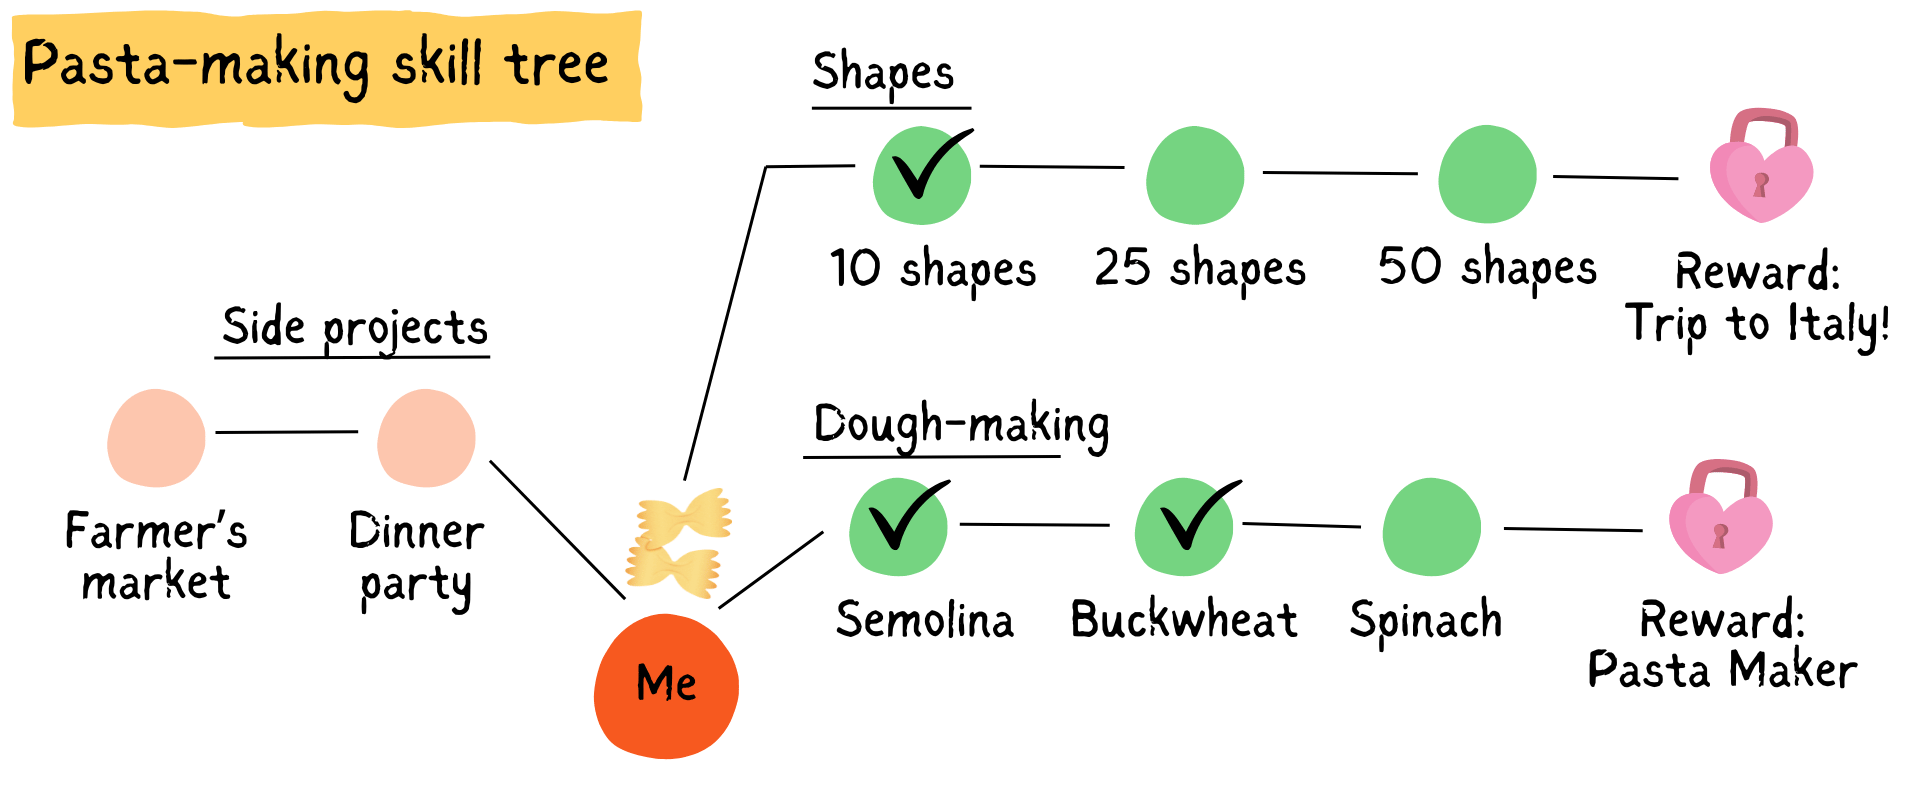 Pasta-making skill tree